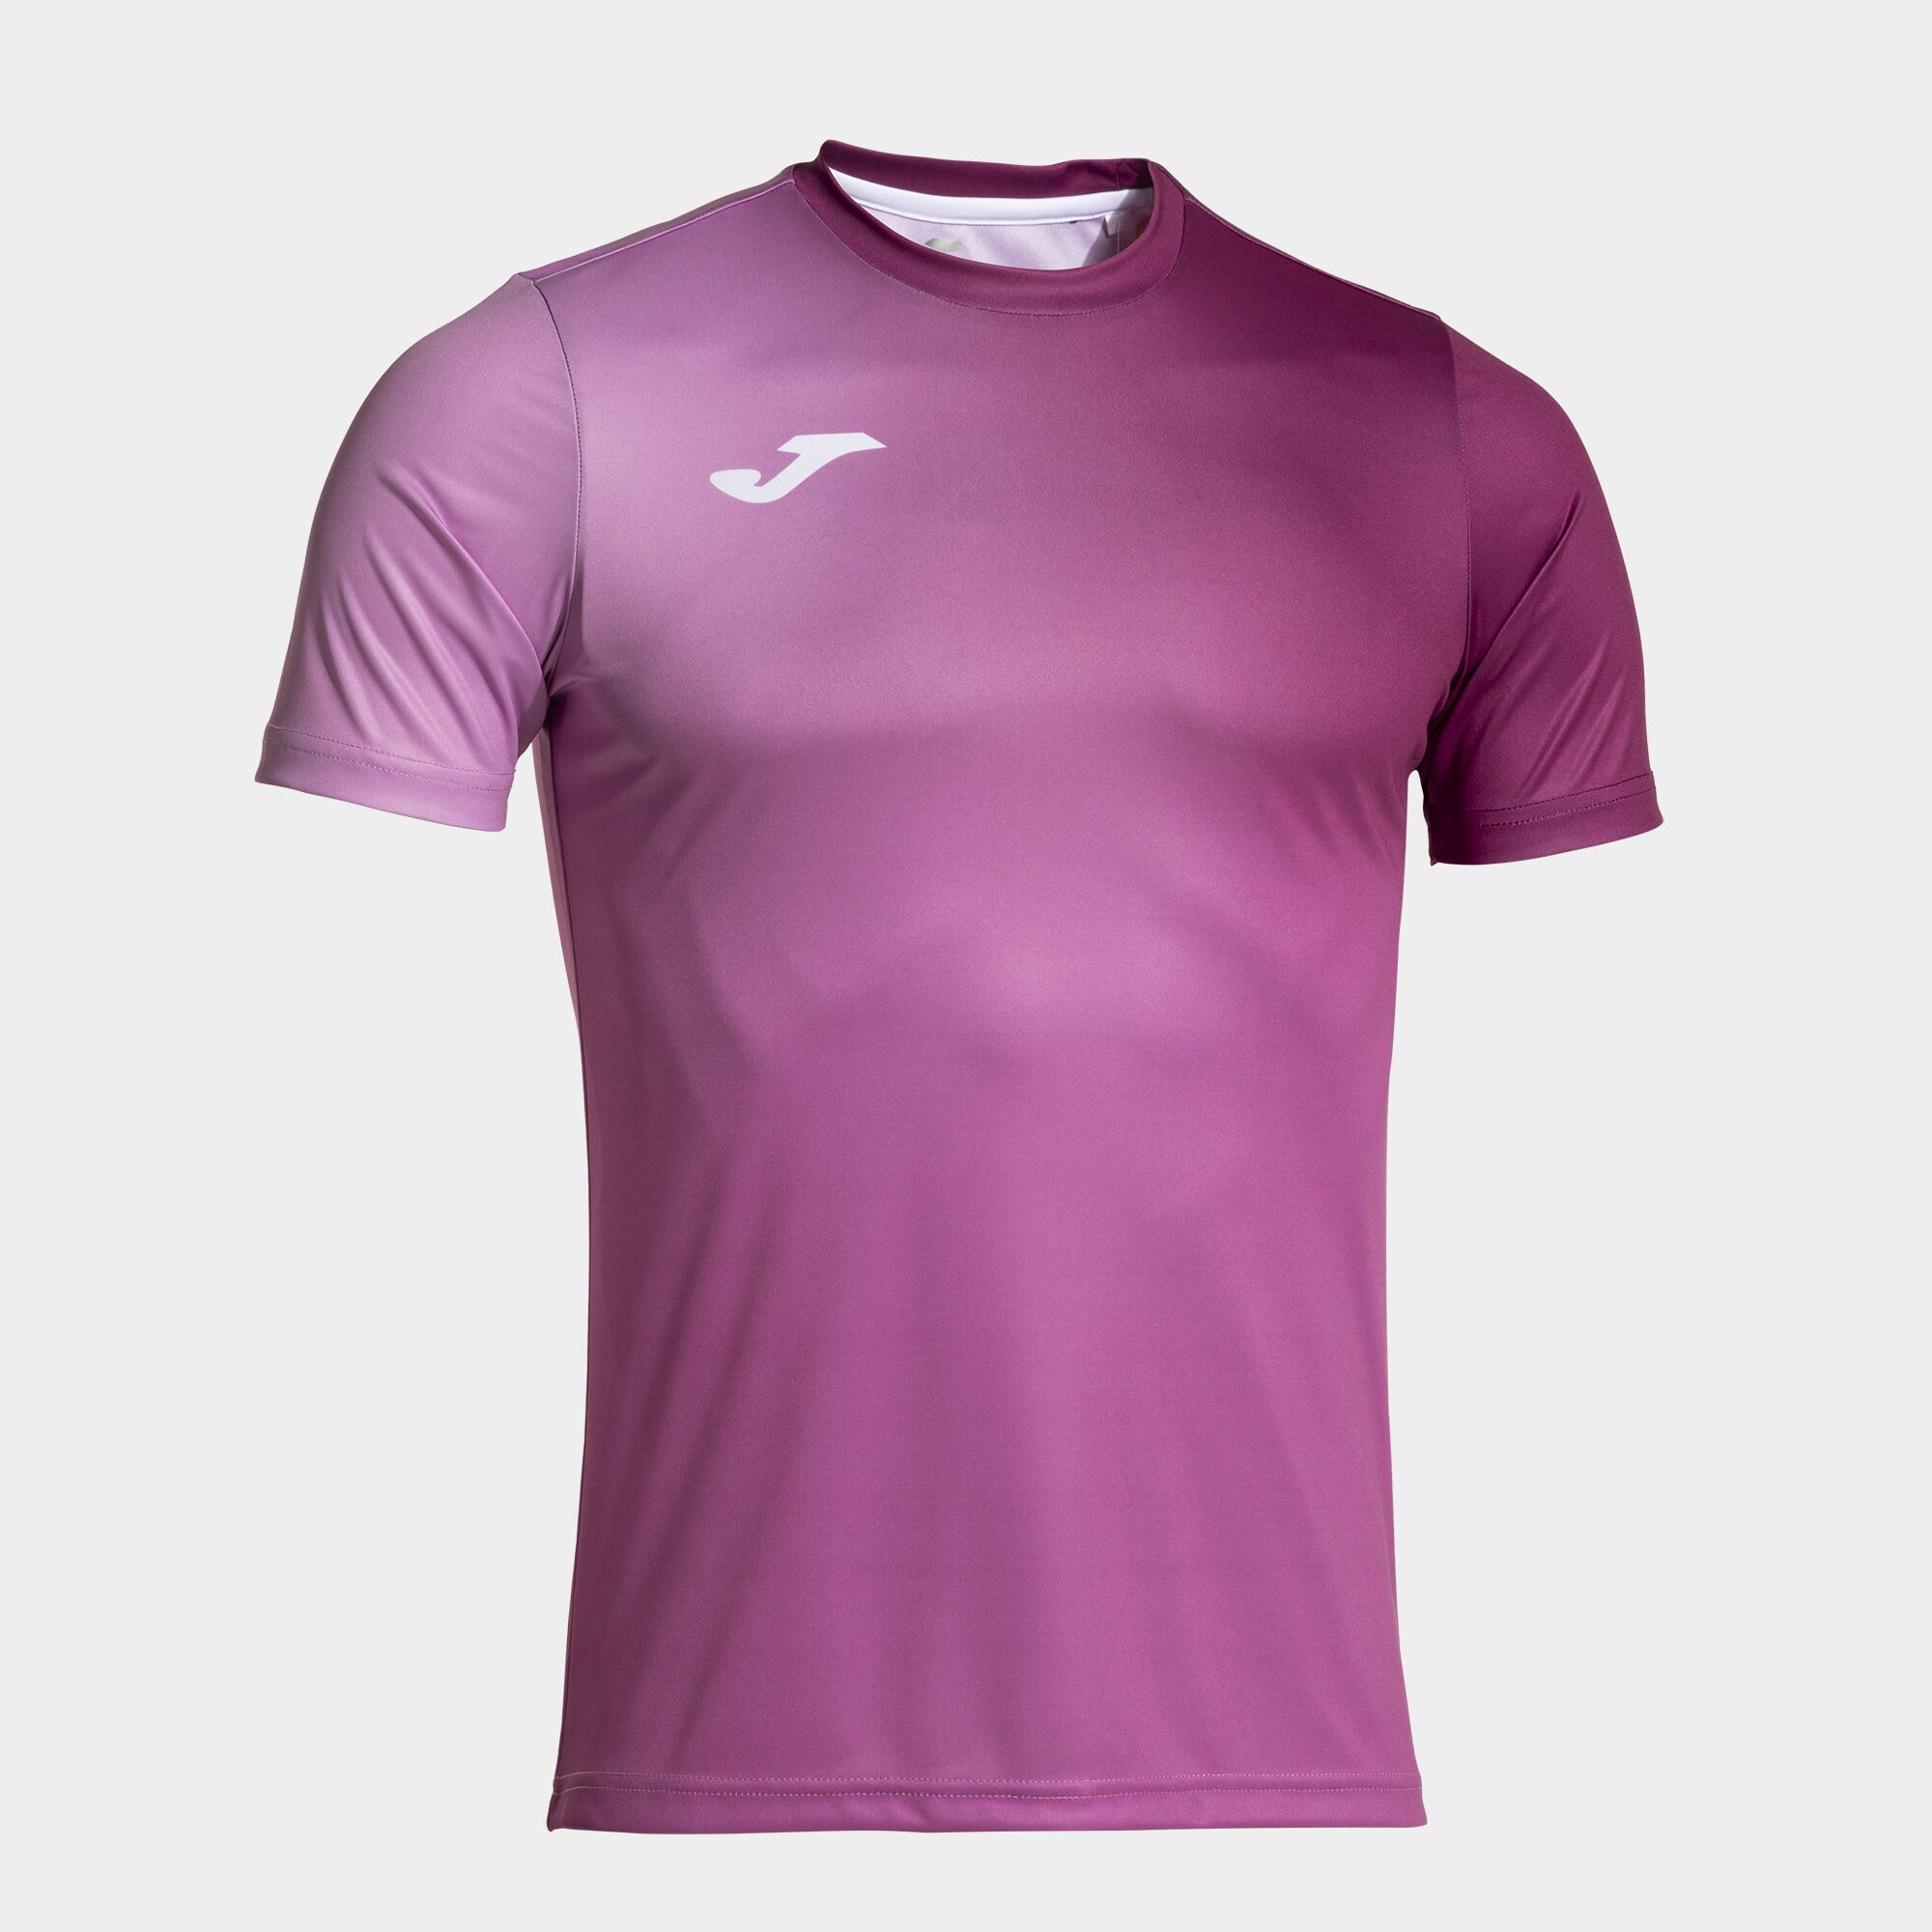 Shirt short sleeve man Pro team pink fuchsia